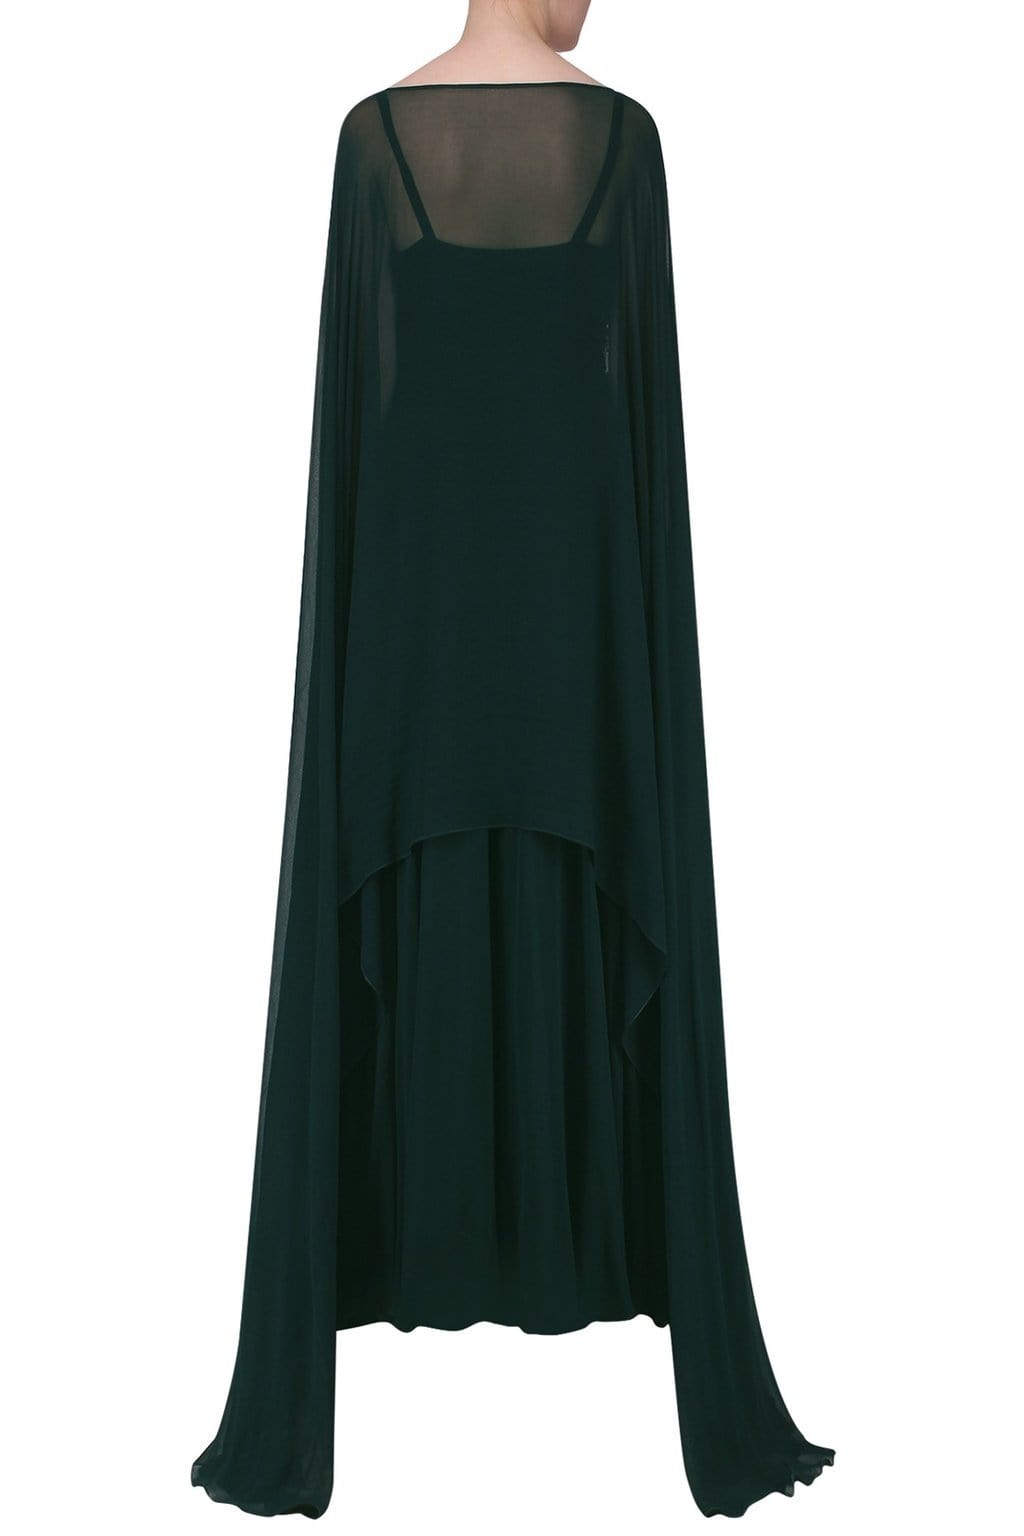 Online Green Cape Stylish Anarakli Suit SFALM20 - Siya Fashions